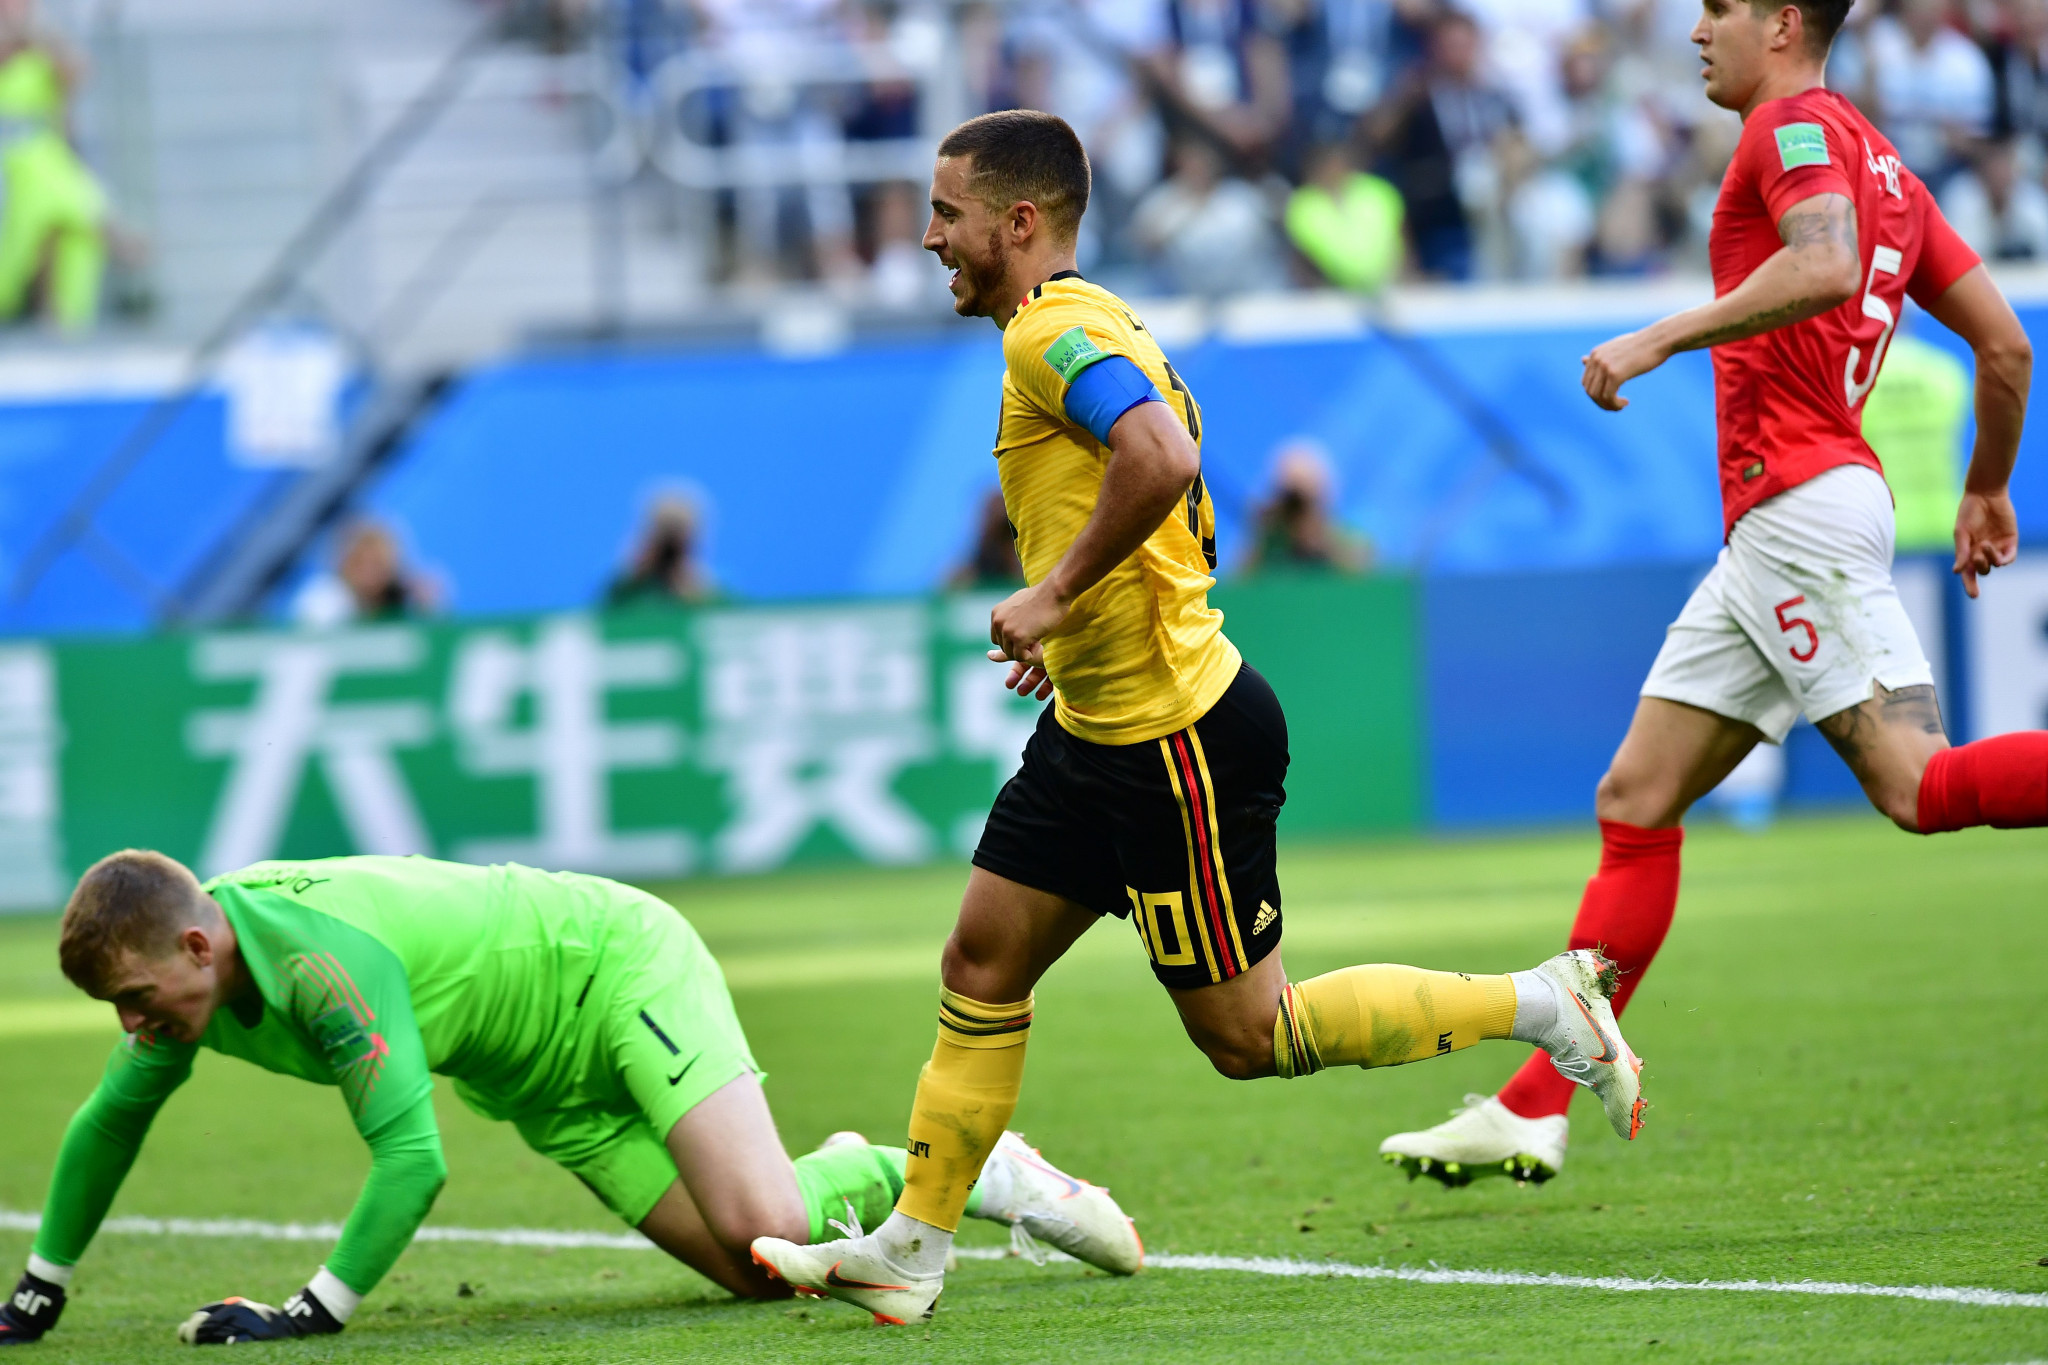 Belgian captain Eden Hazard scored their second goal ©Getty Images